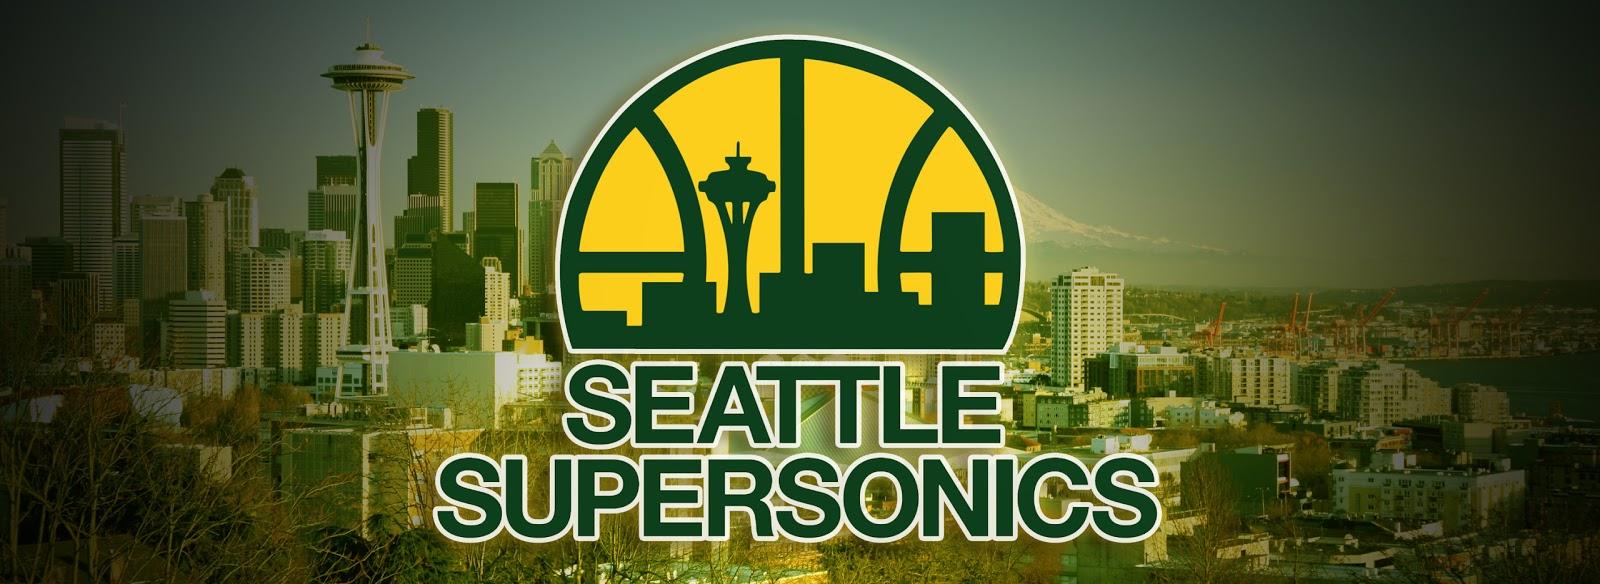 Seattle Supersonics Wallpaper 8 X 584